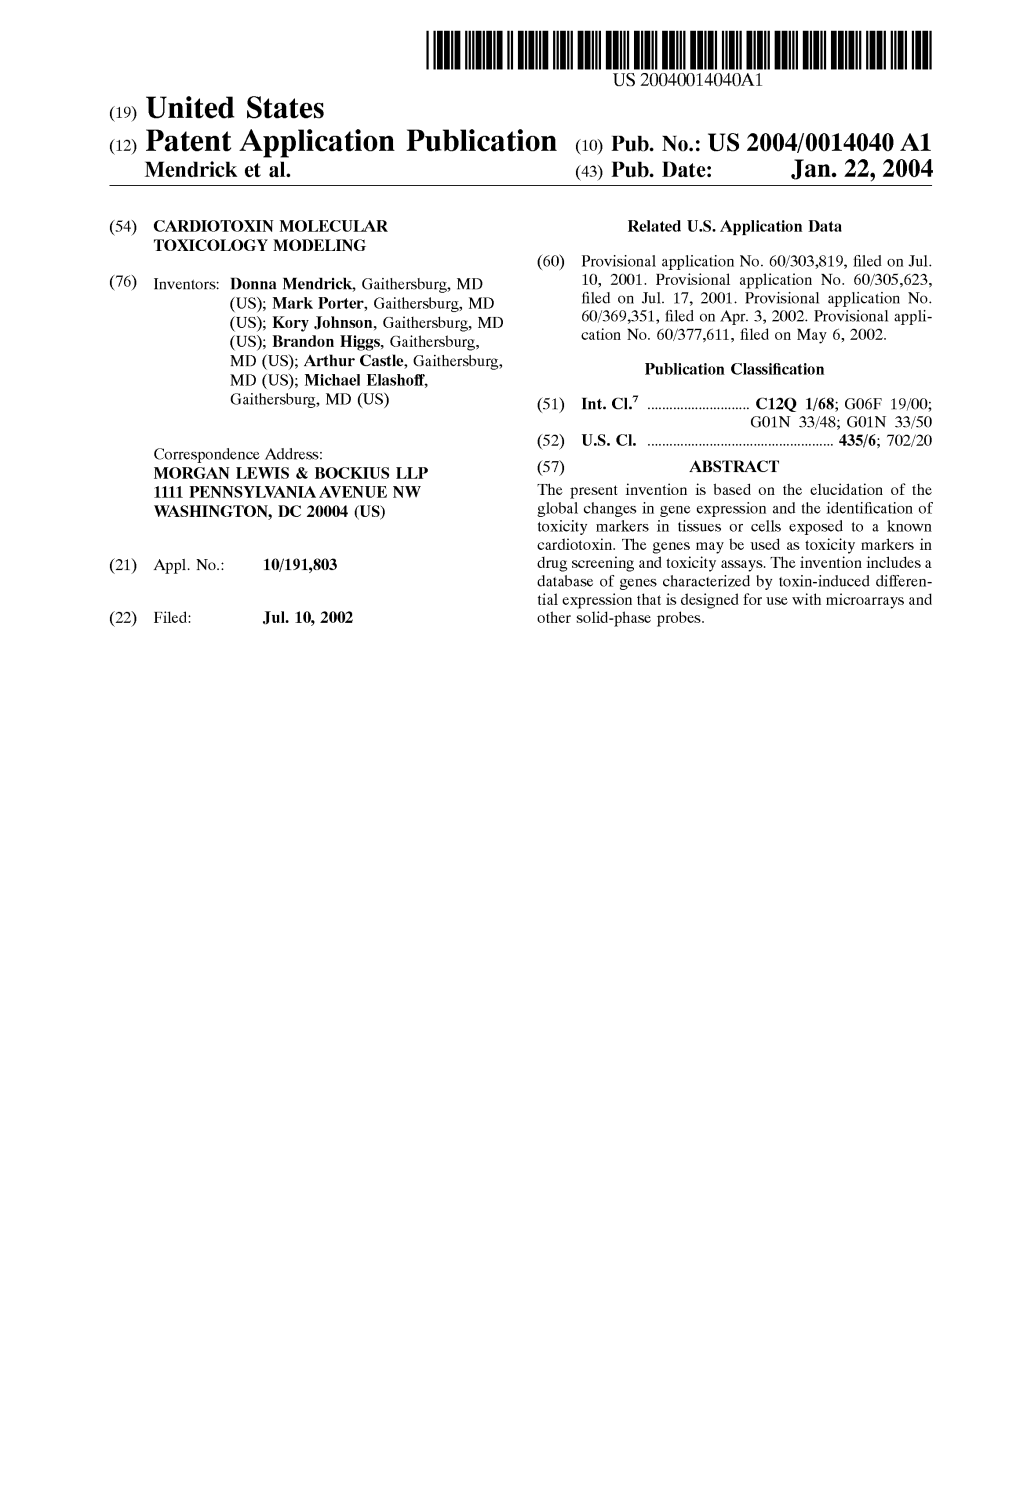 (12) Patent Application Publication (10) Pub. No.: US 2004/0014040 A1 Mendrick Et Al